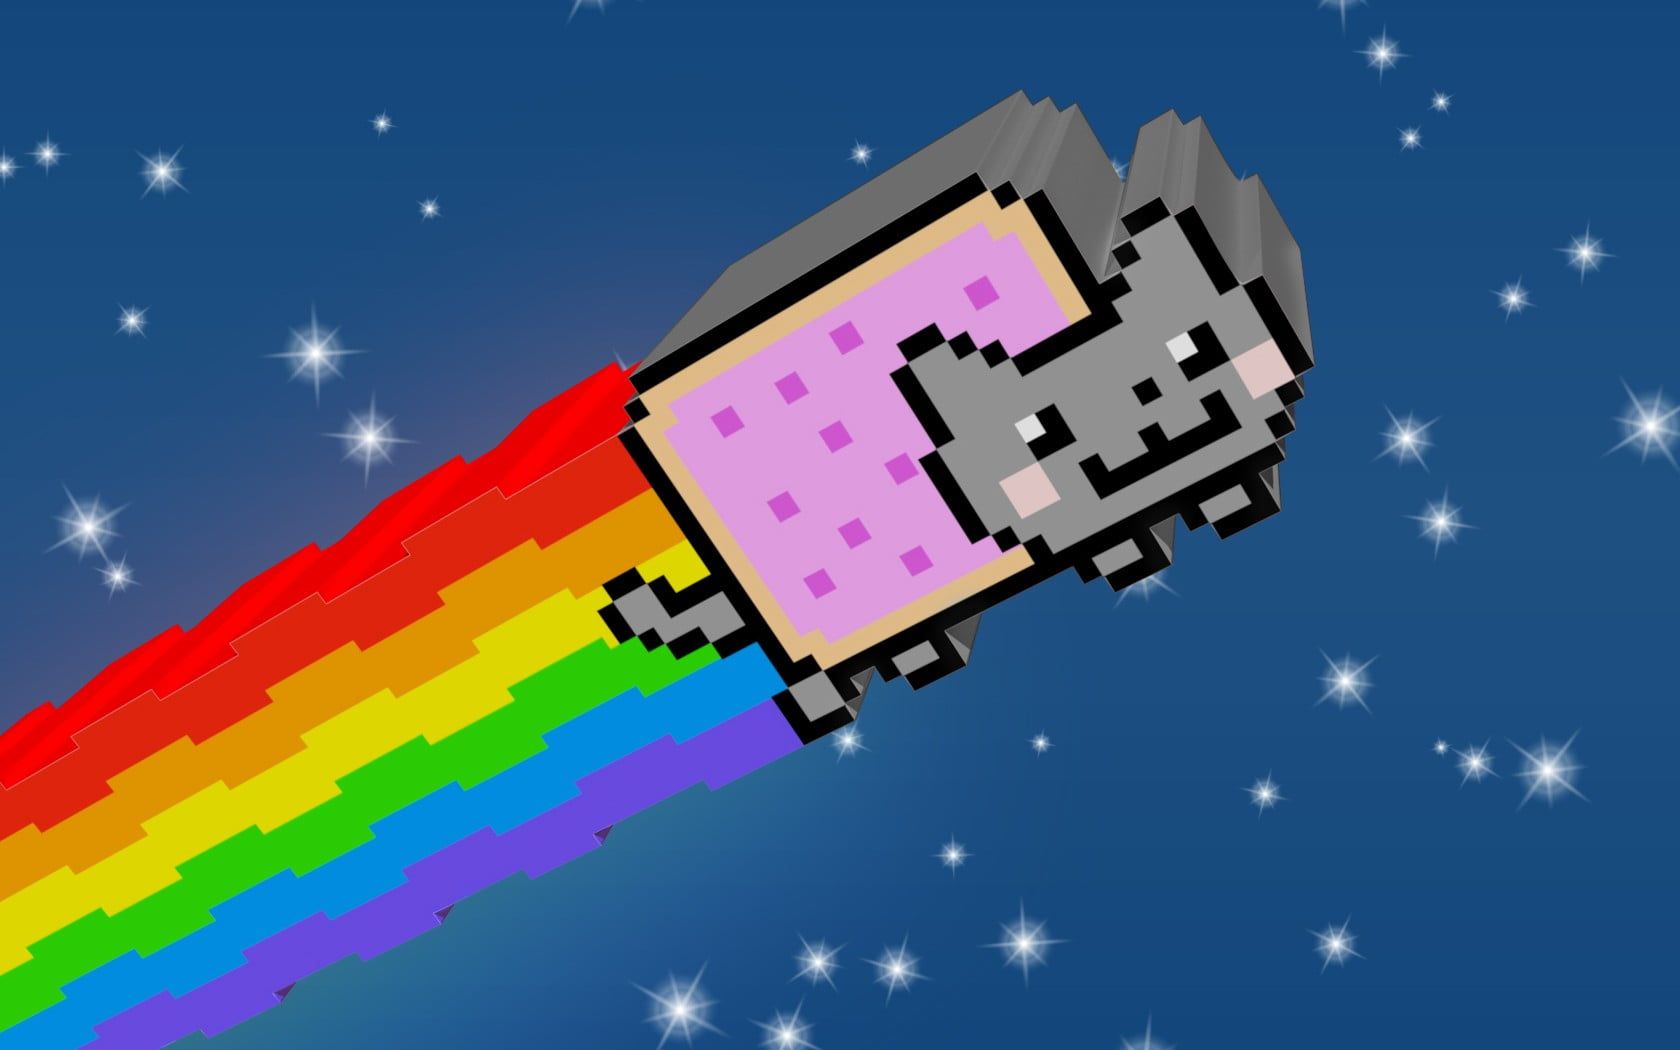 Flying cat with rainbow digital wallpaper, Nyan Cat, 3D HD